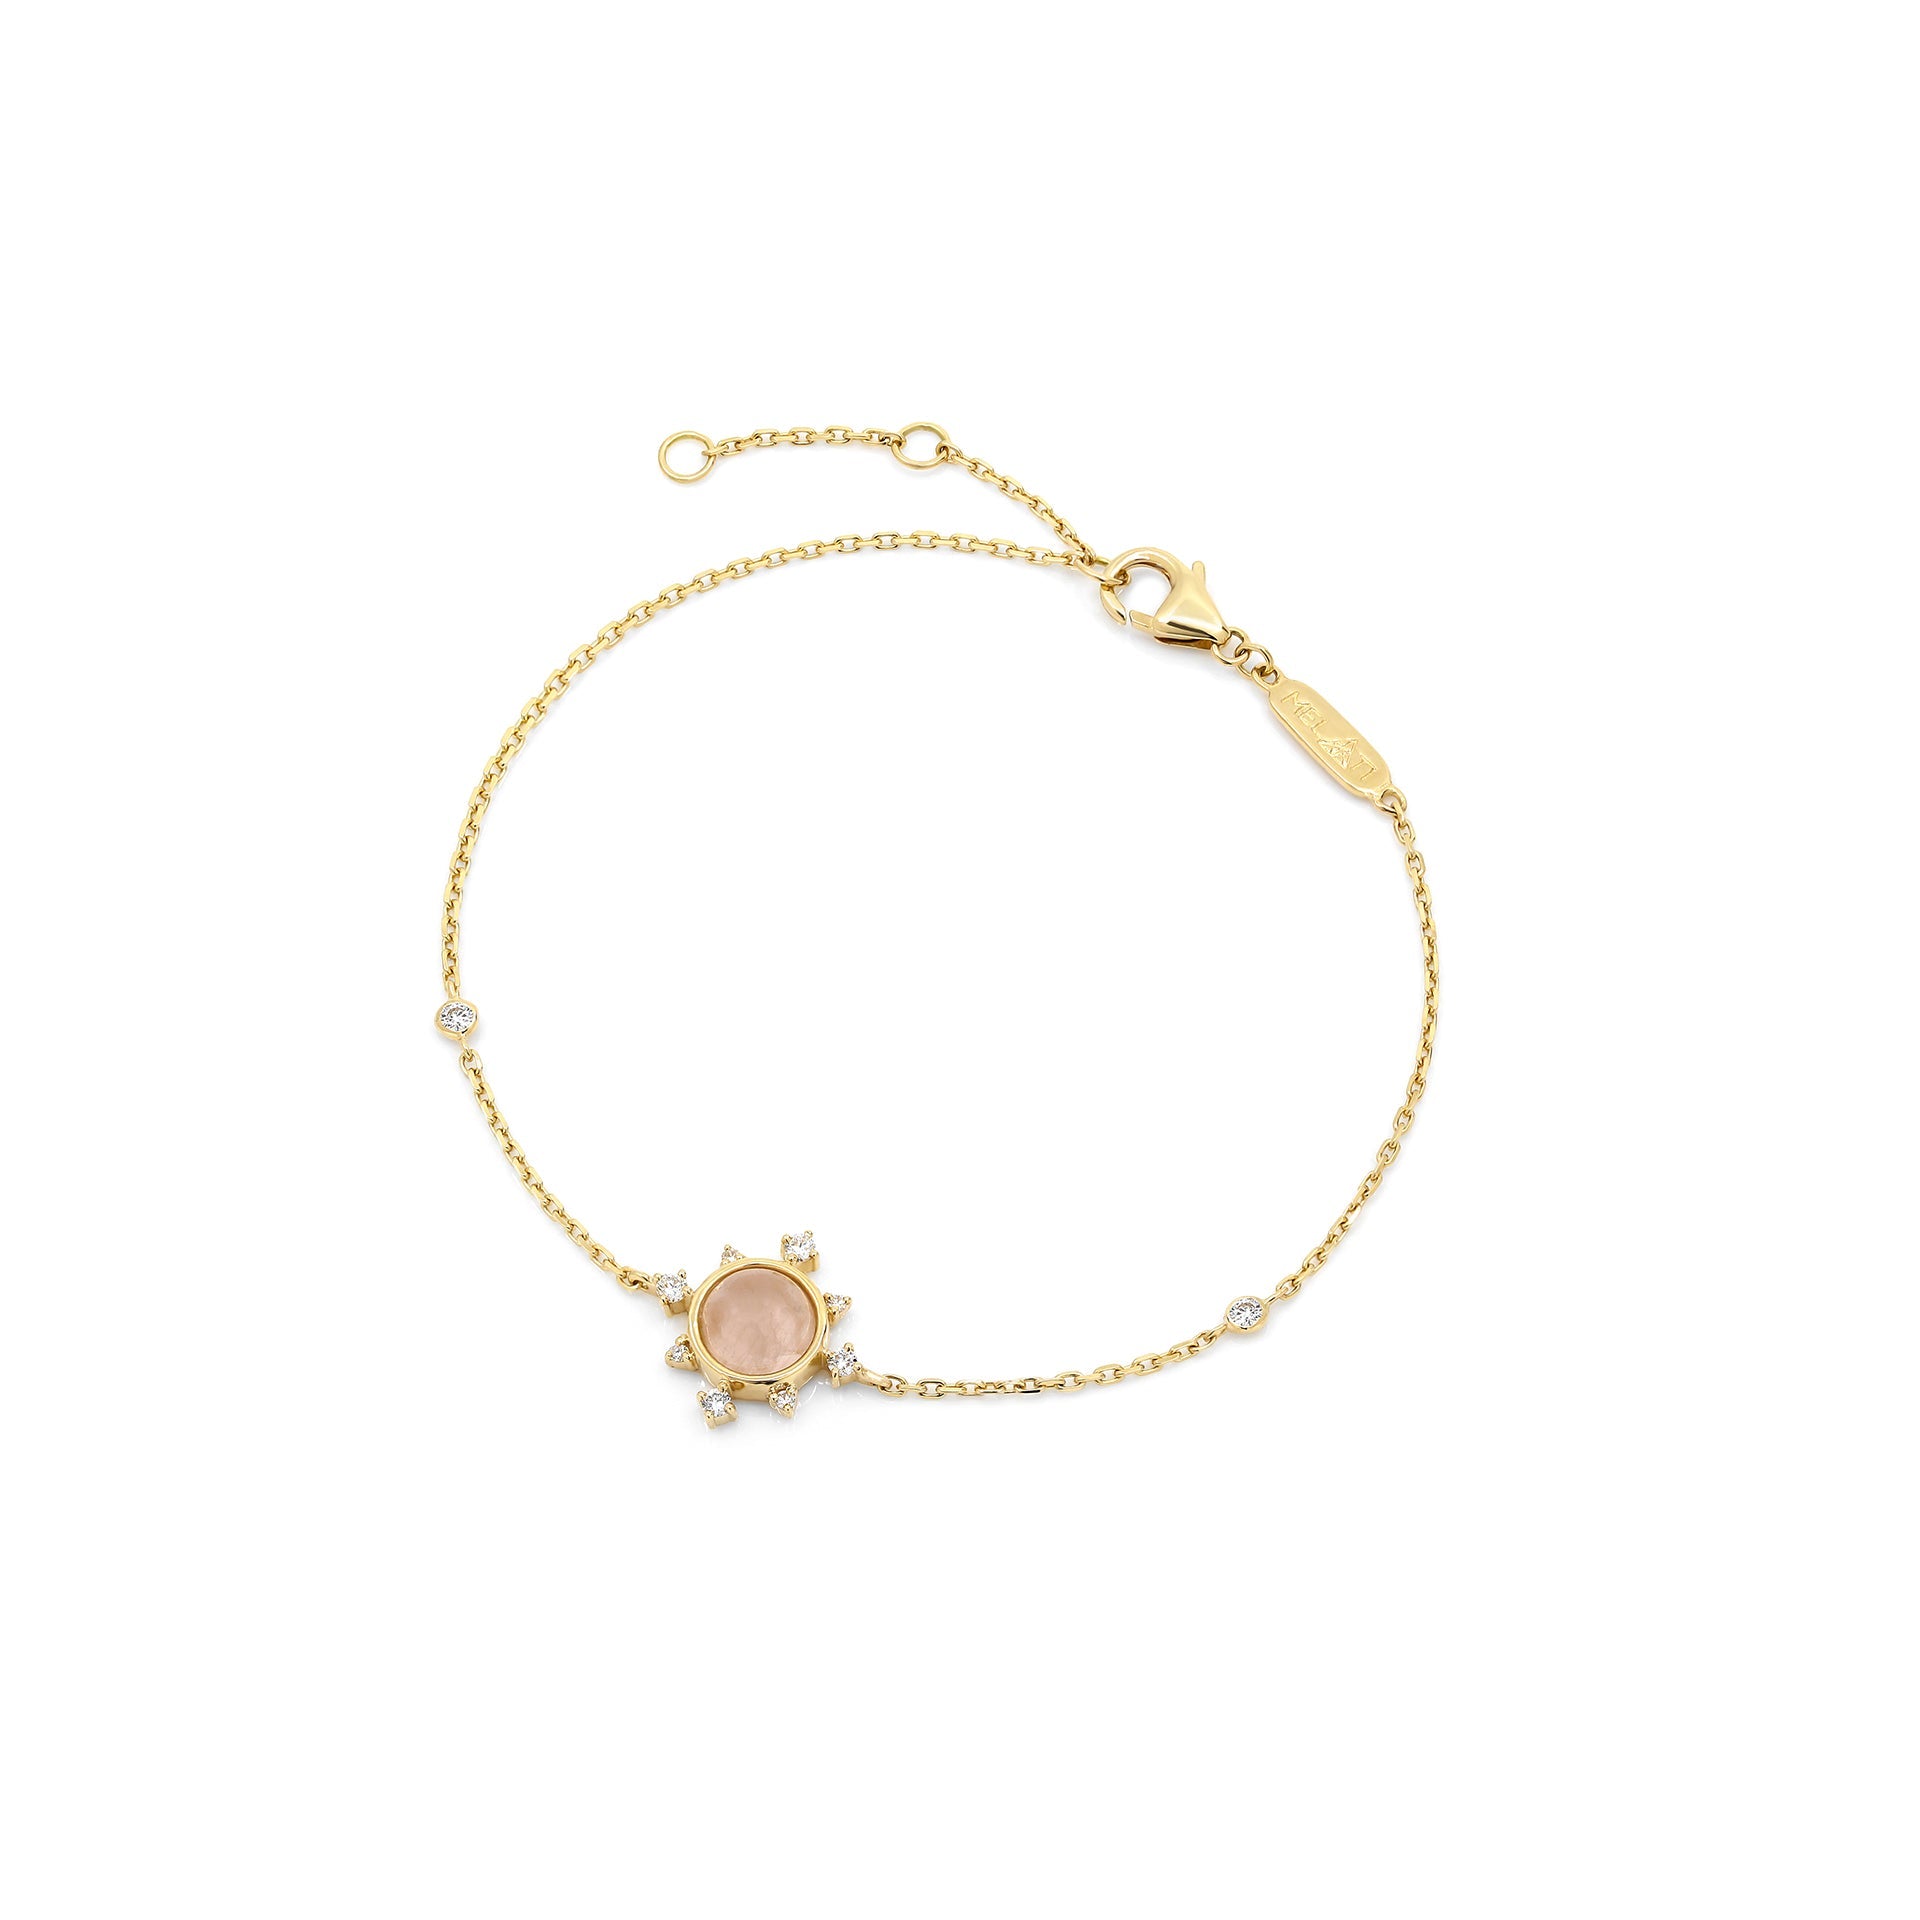 Melati Rise bracelet in Yellow Gold with Rose Quartz and diamonds